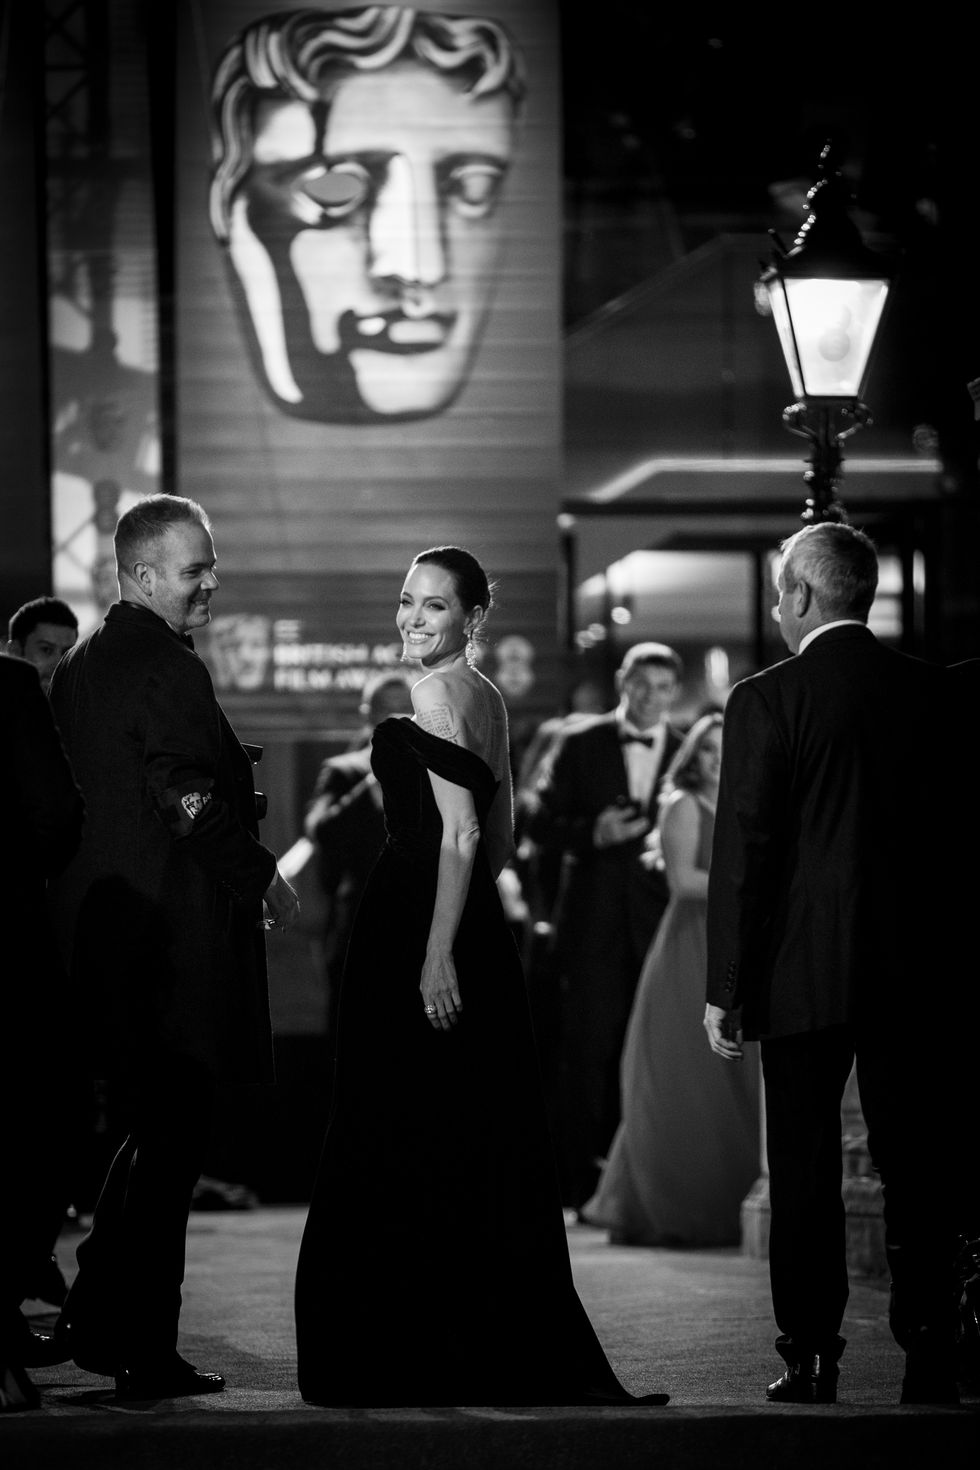 EE British Academy Film Awards - Red Carpet Arrivals